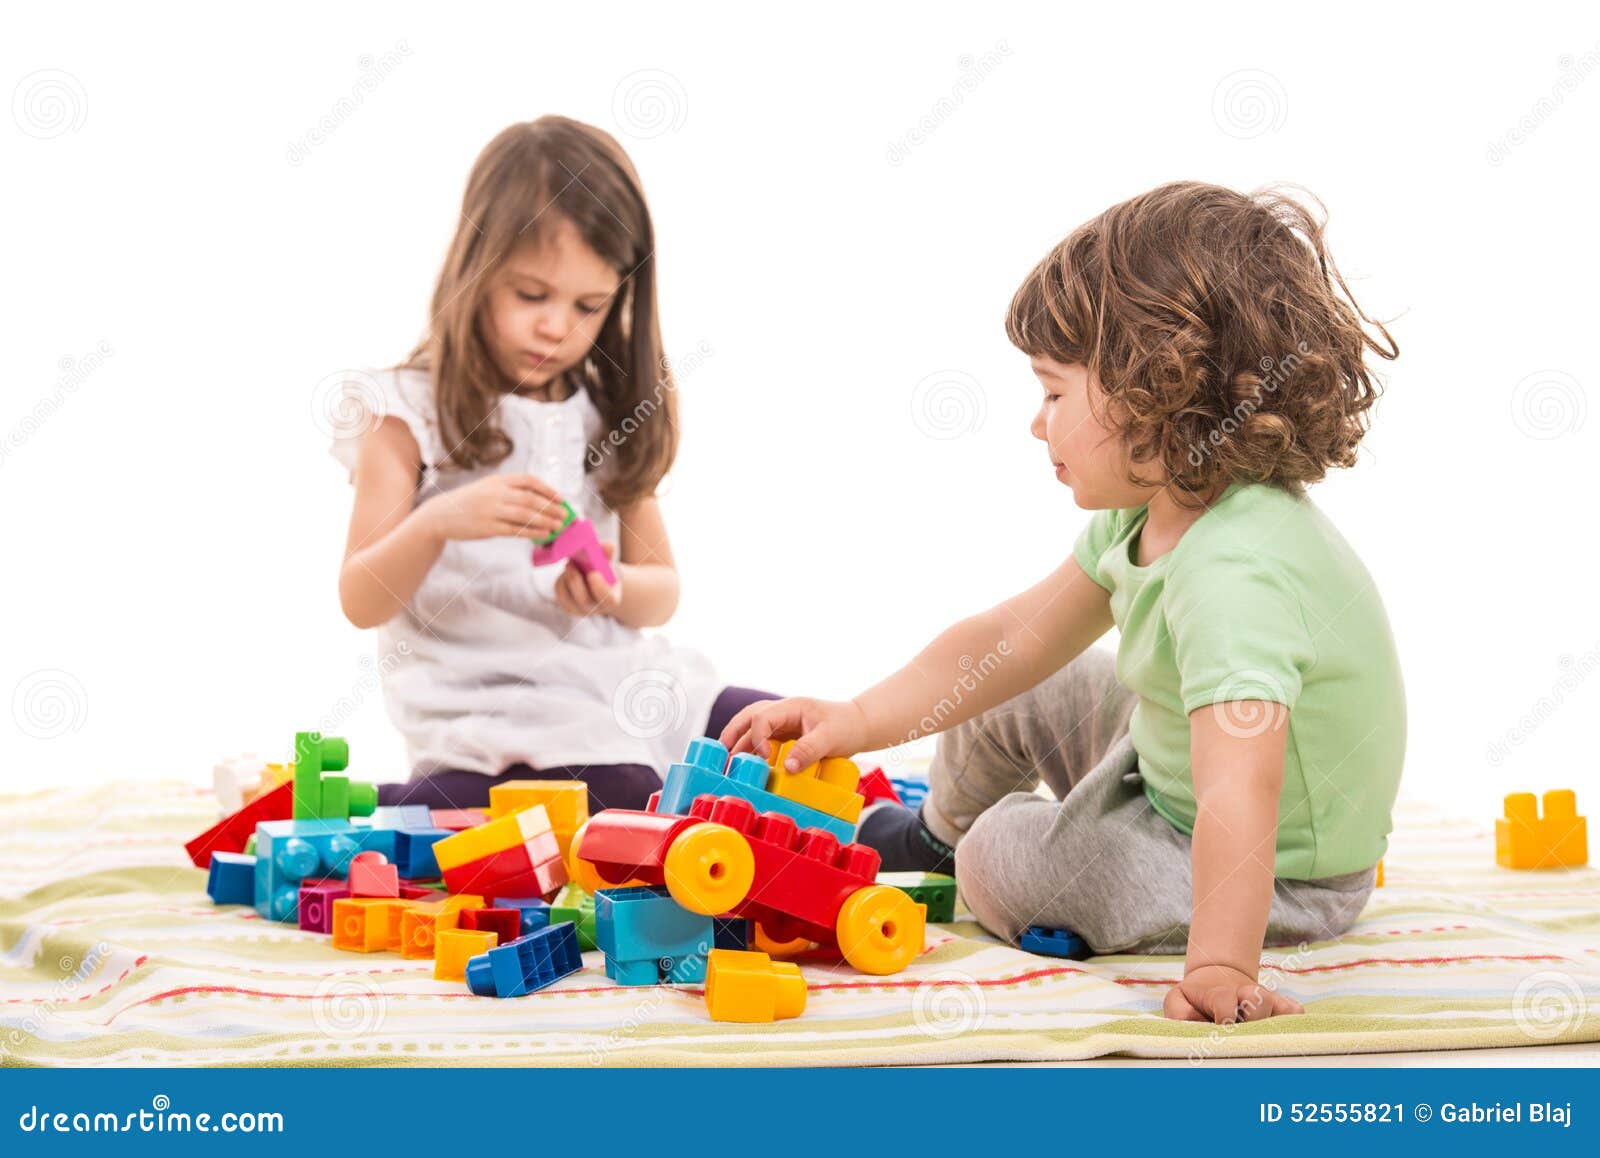 kids playing with bricks toys